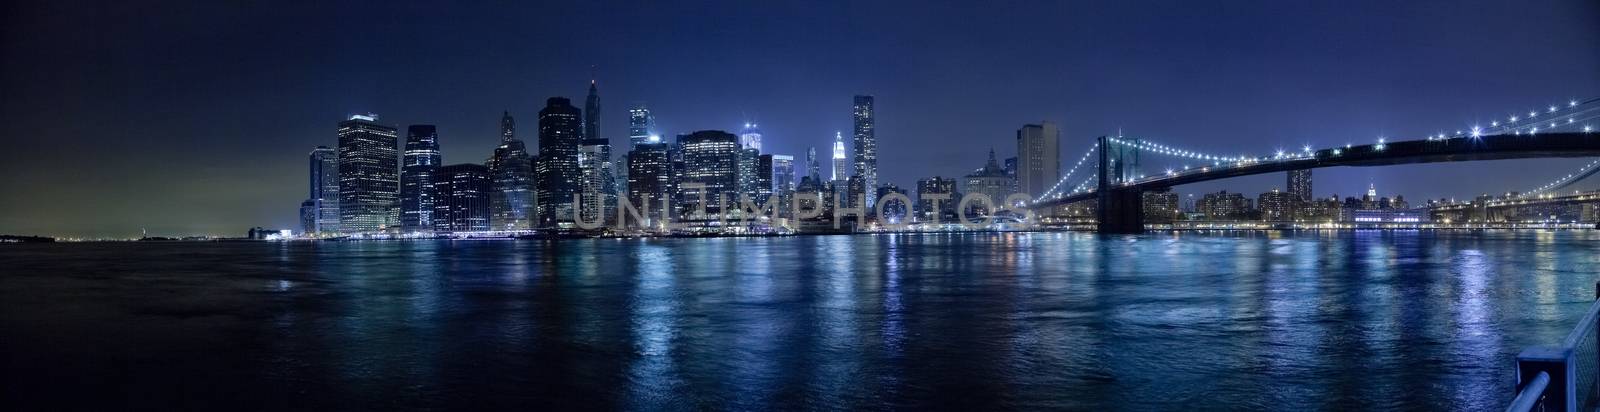 The New York City skyline w Brooklyn Bridge Hi-Res by hanusst